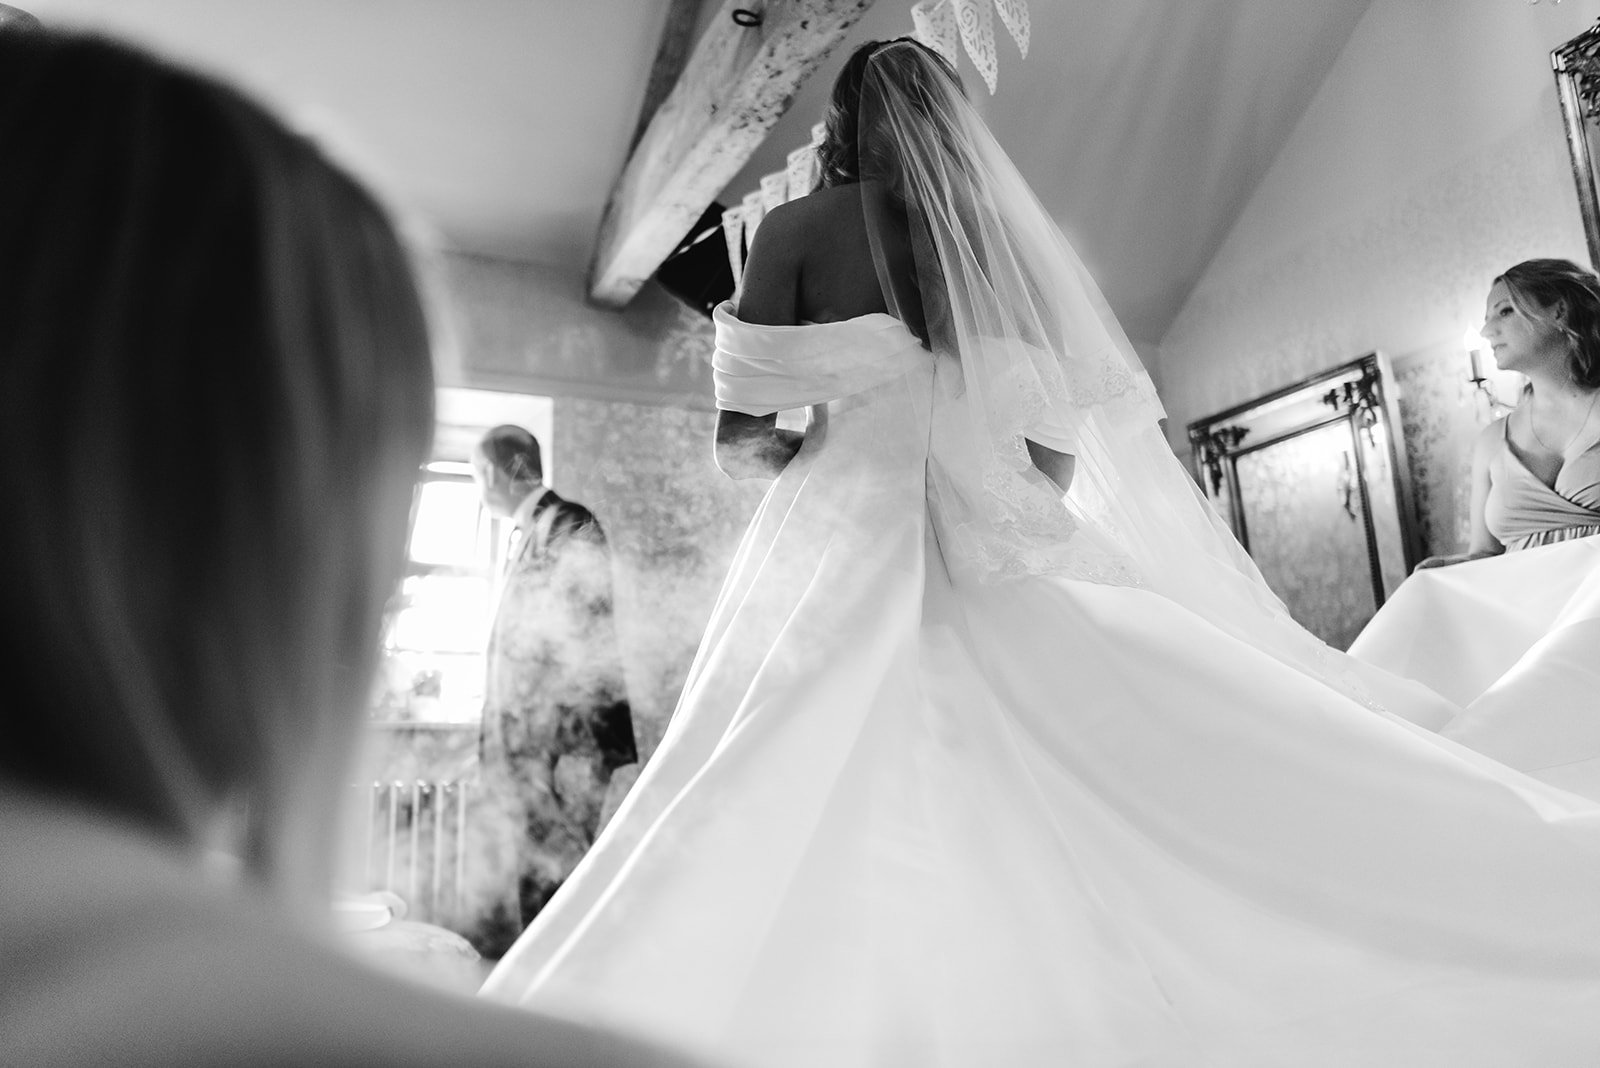 Wedding dress being steamed